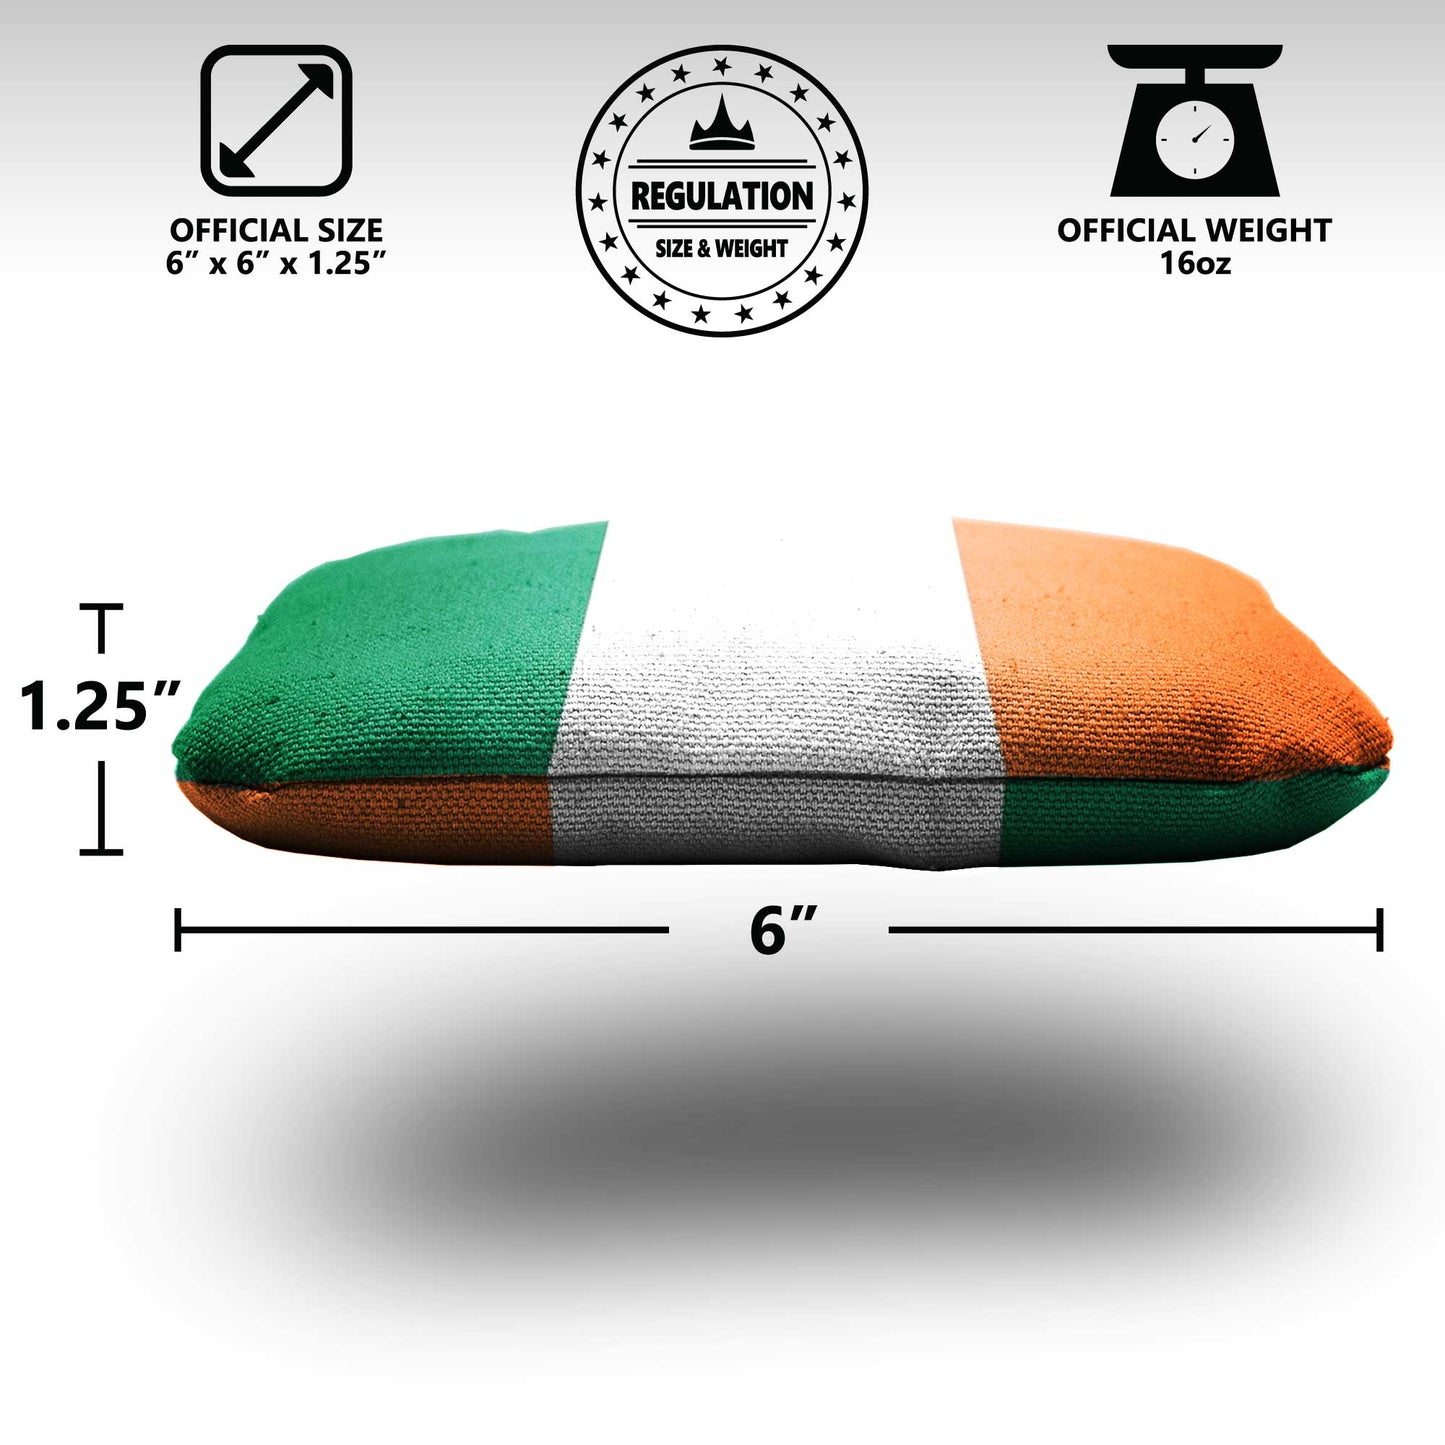 The Irish and Mericas - 8 Cornhole Bags